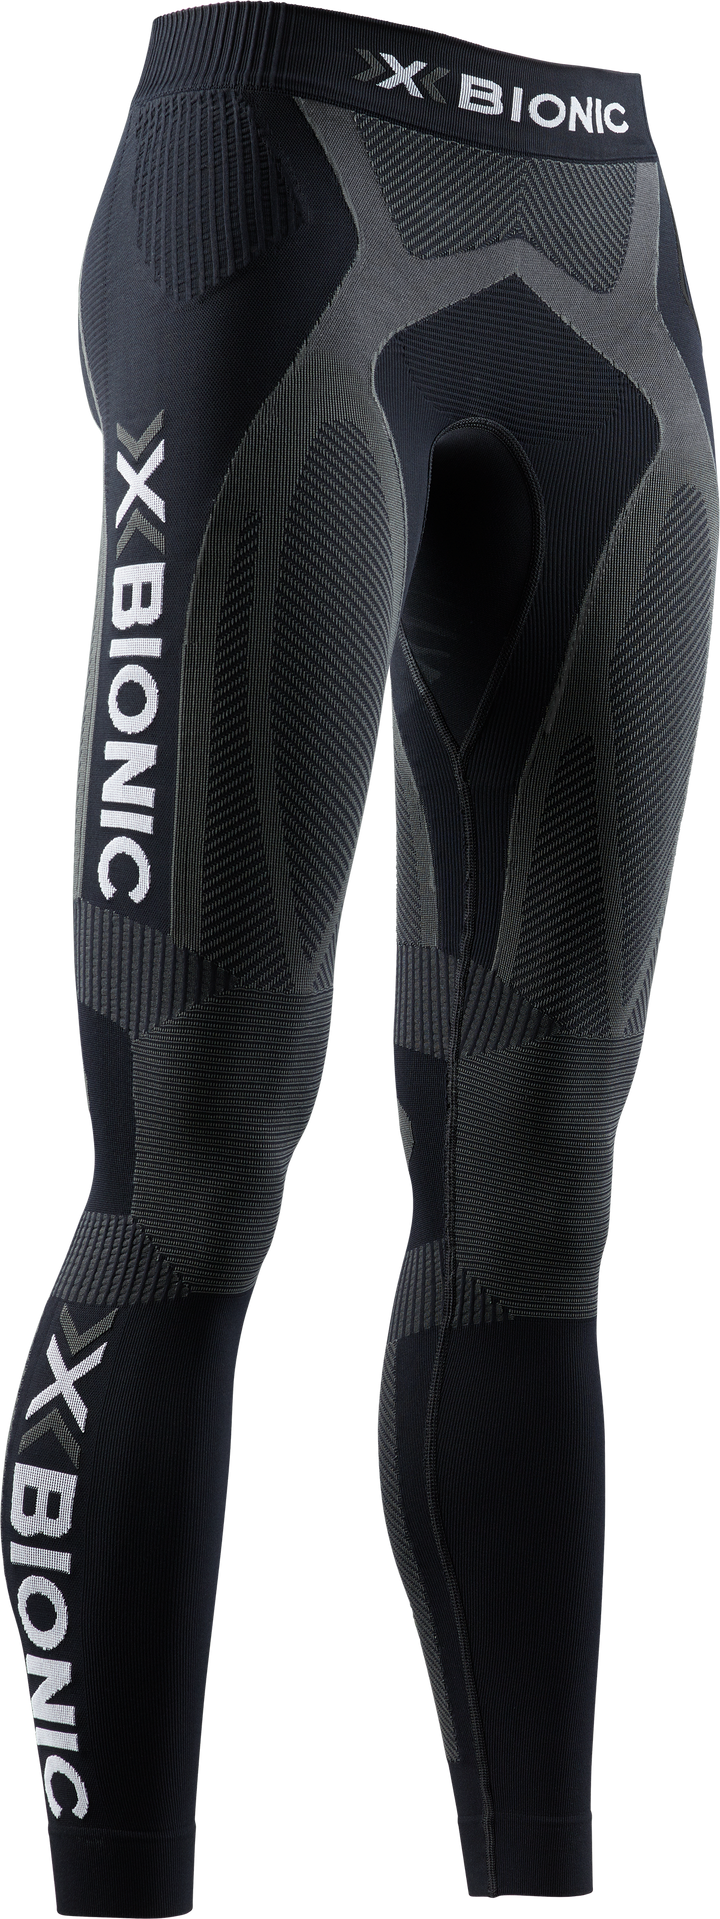 X-Bionic O020569 Running Compression Pants Leggings Men's Size S  Black/Yellow